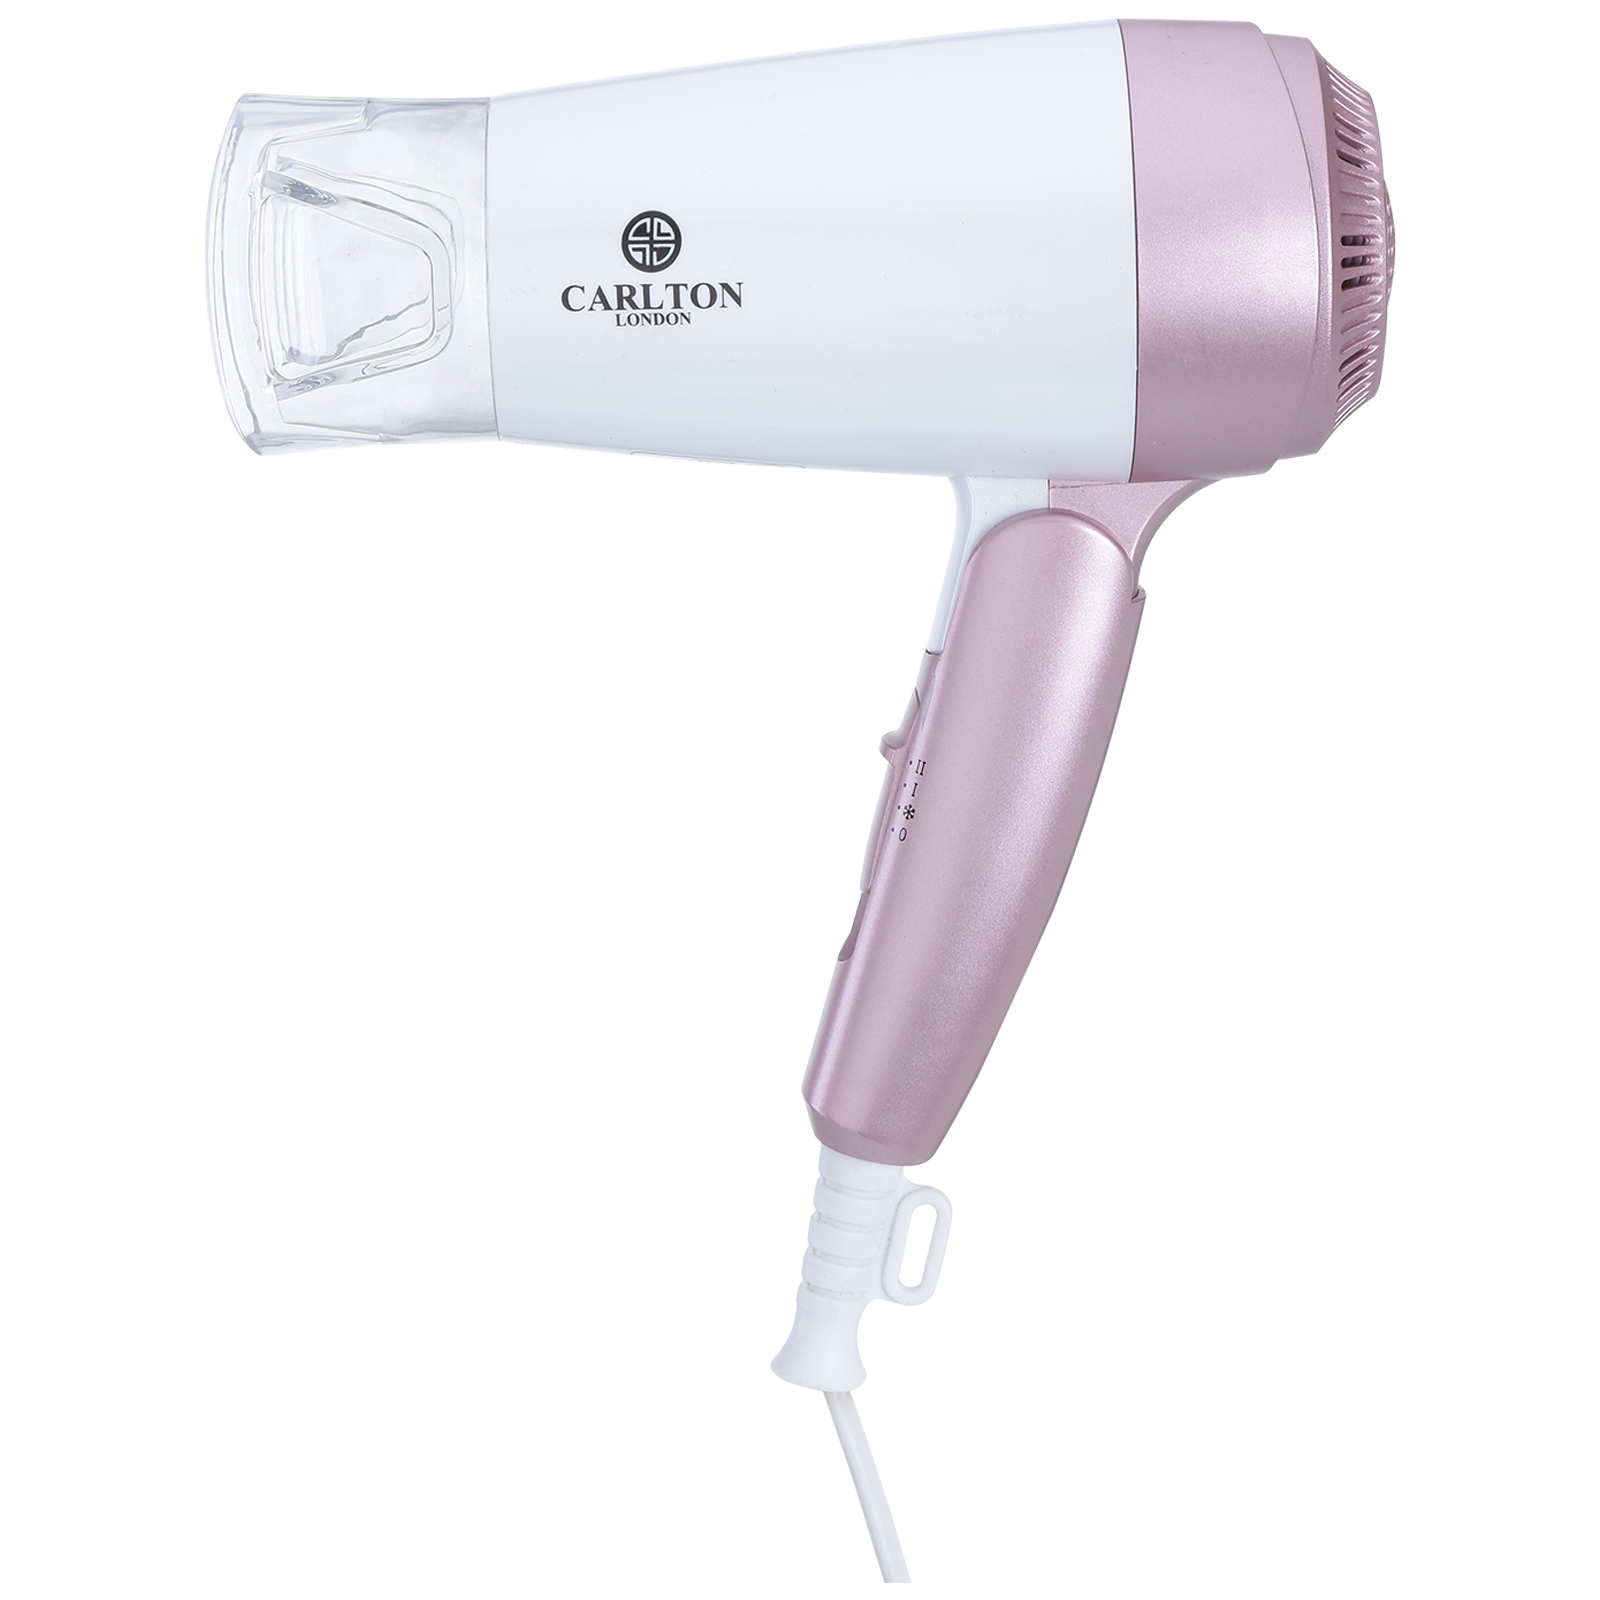 Carlton London 3 Setting Hair Dryer (Overheat Protection, CLSHCG102sHC14, White)